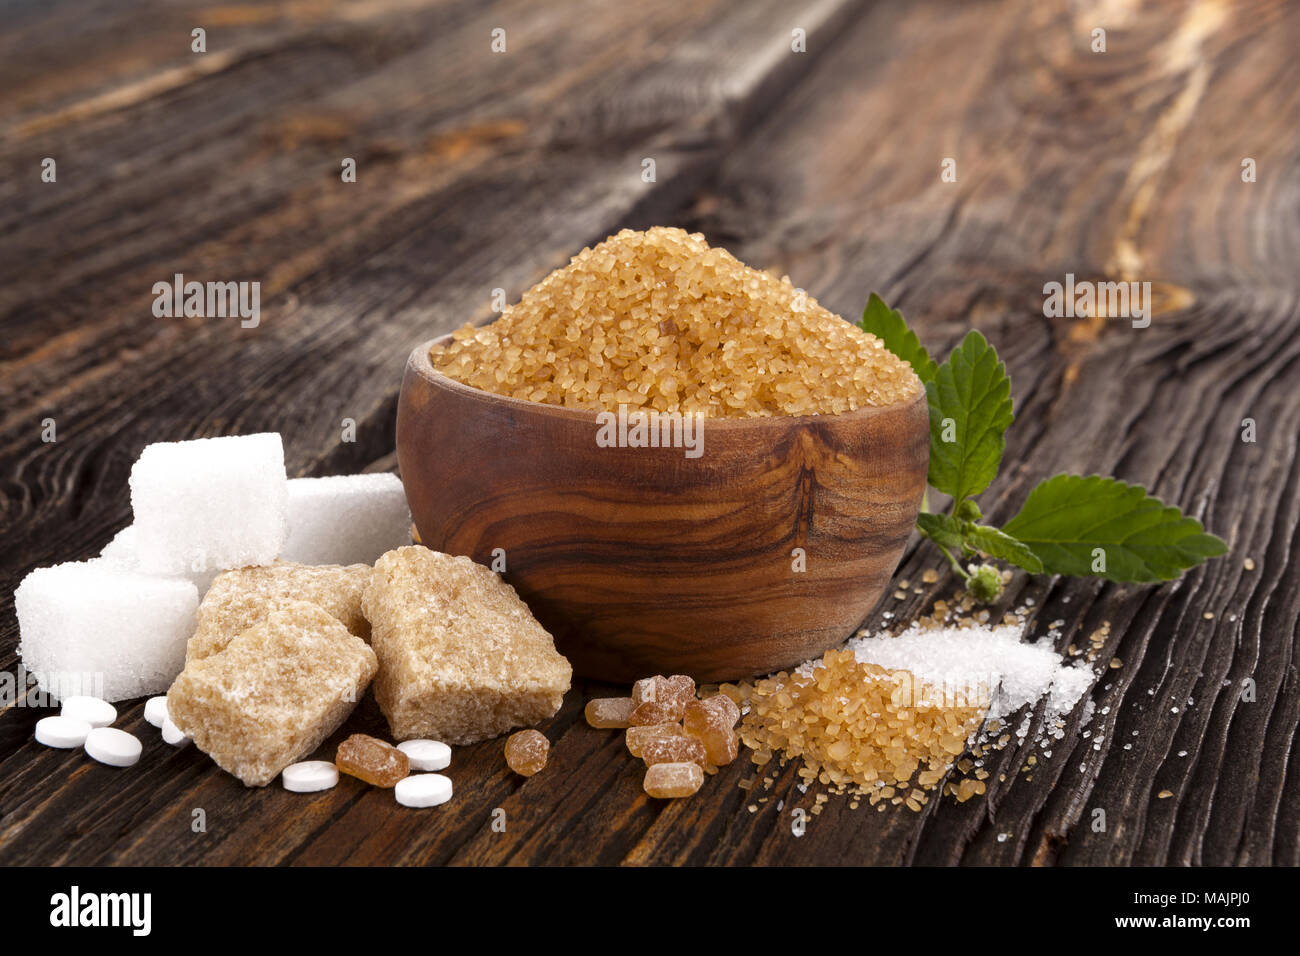 Various types of sugar, brown sugar, white sugar, crystal sugar, artificial sweetener, cane sugar and aztec sweet herb on wooden table. Stock Photo